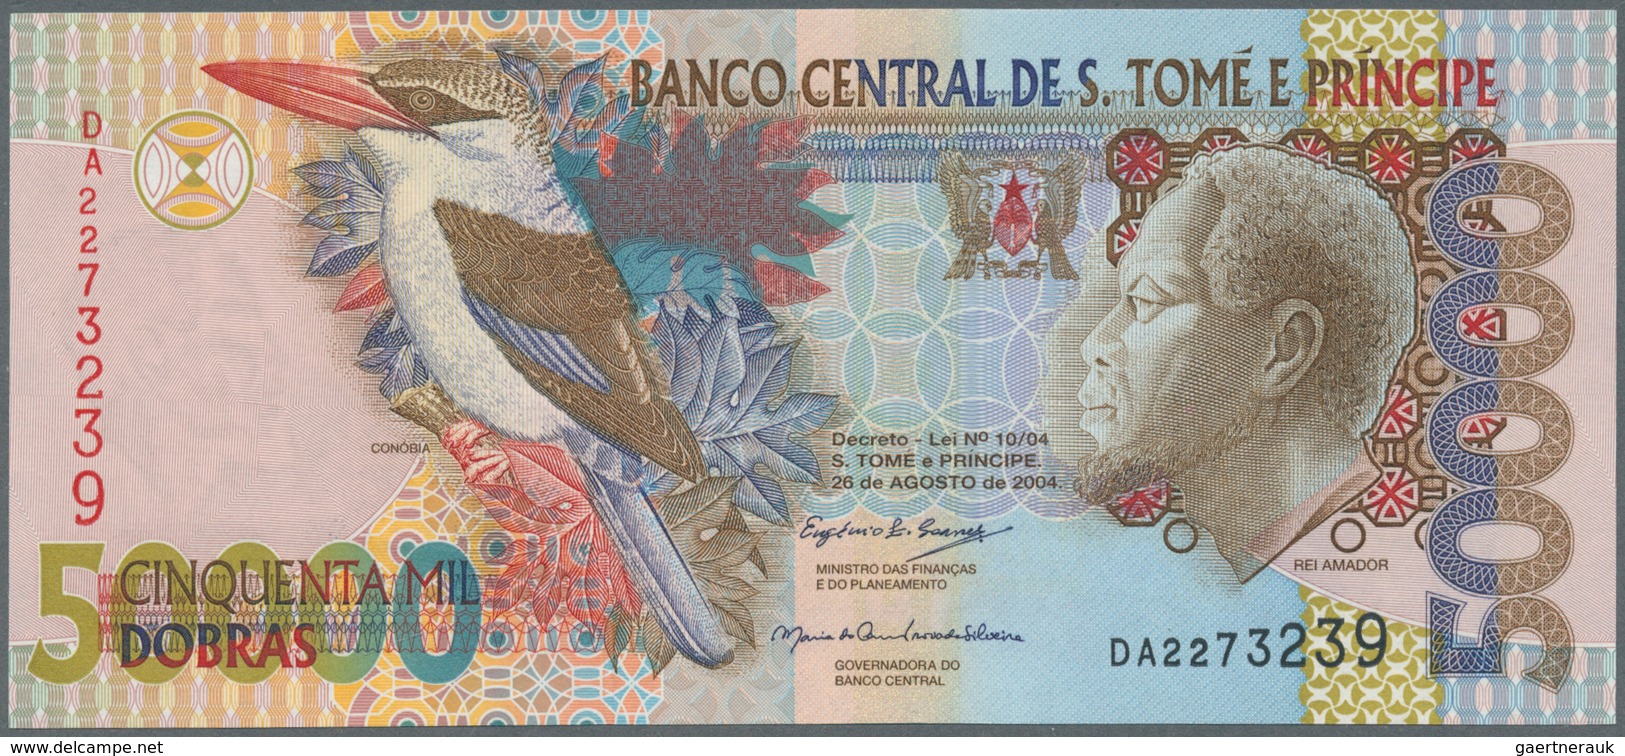 02944 Africa / Afrika: Collectors book with 210 Banknotes from Namibia, Nigeria, Rwanda-Burundi, Rwanda, R